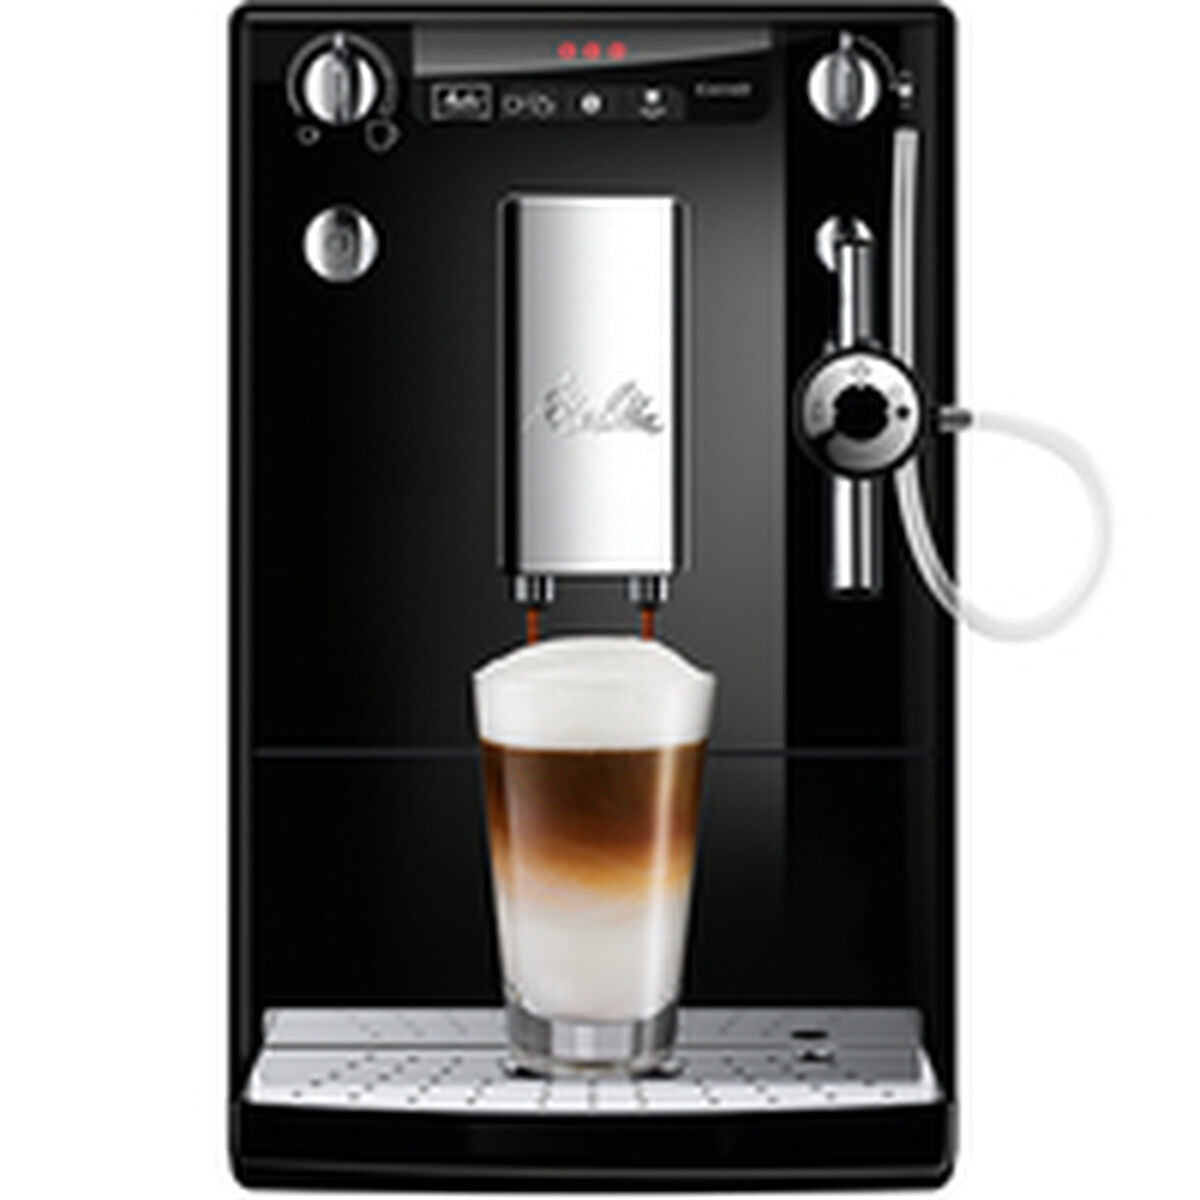 Superautomatische Kaffeemaschine Melitta E957-101 Schwarz 1400 W 15 bar - CA International  